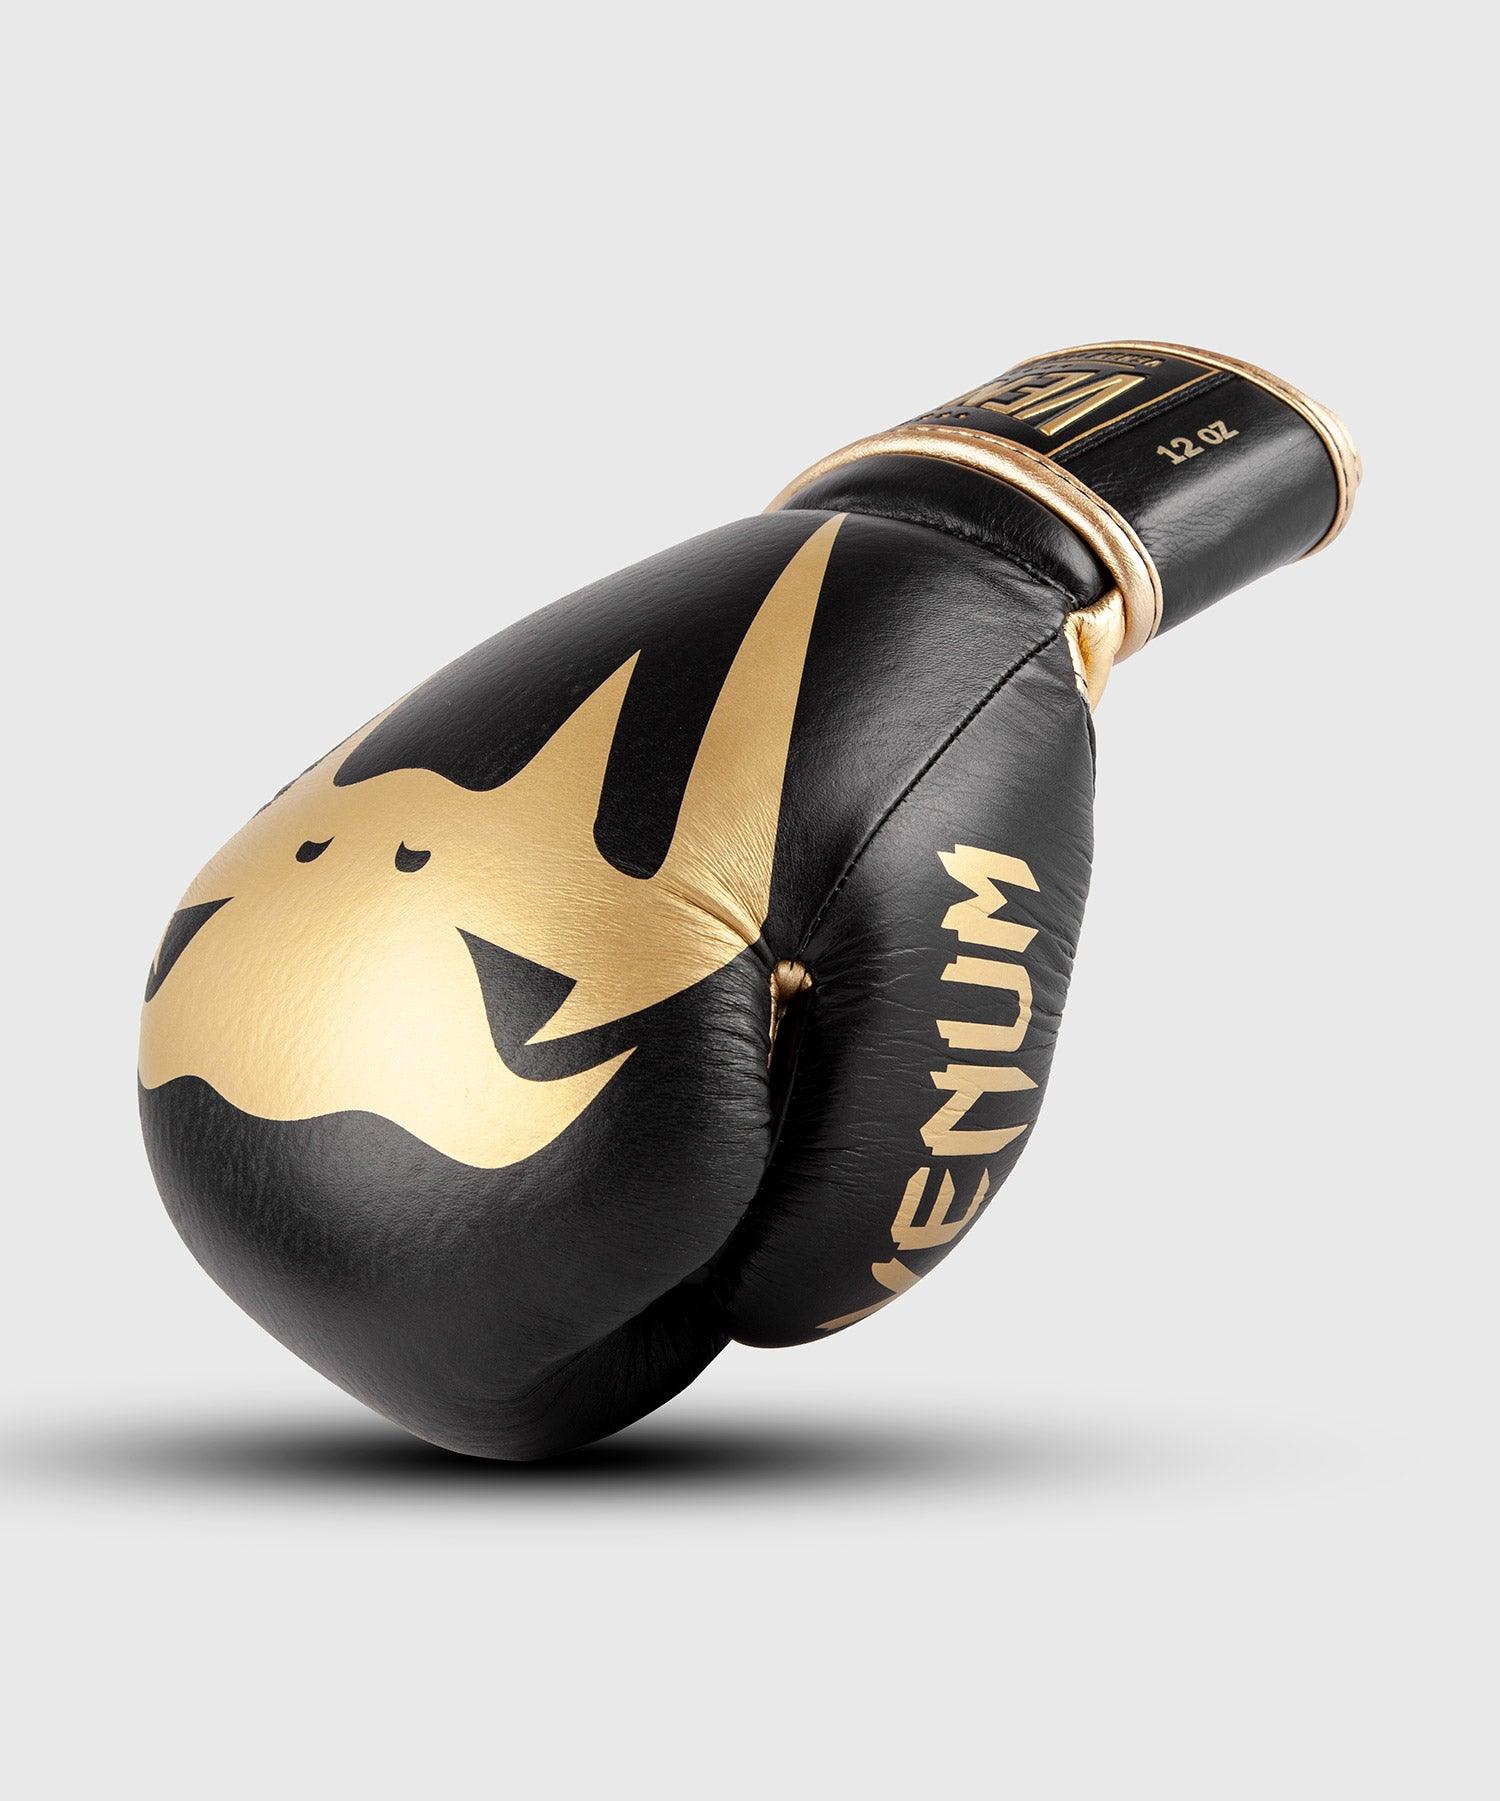 Venum Giant 2.0 Pro Boxing Gloves Velcro - Black/Gold Picture 1